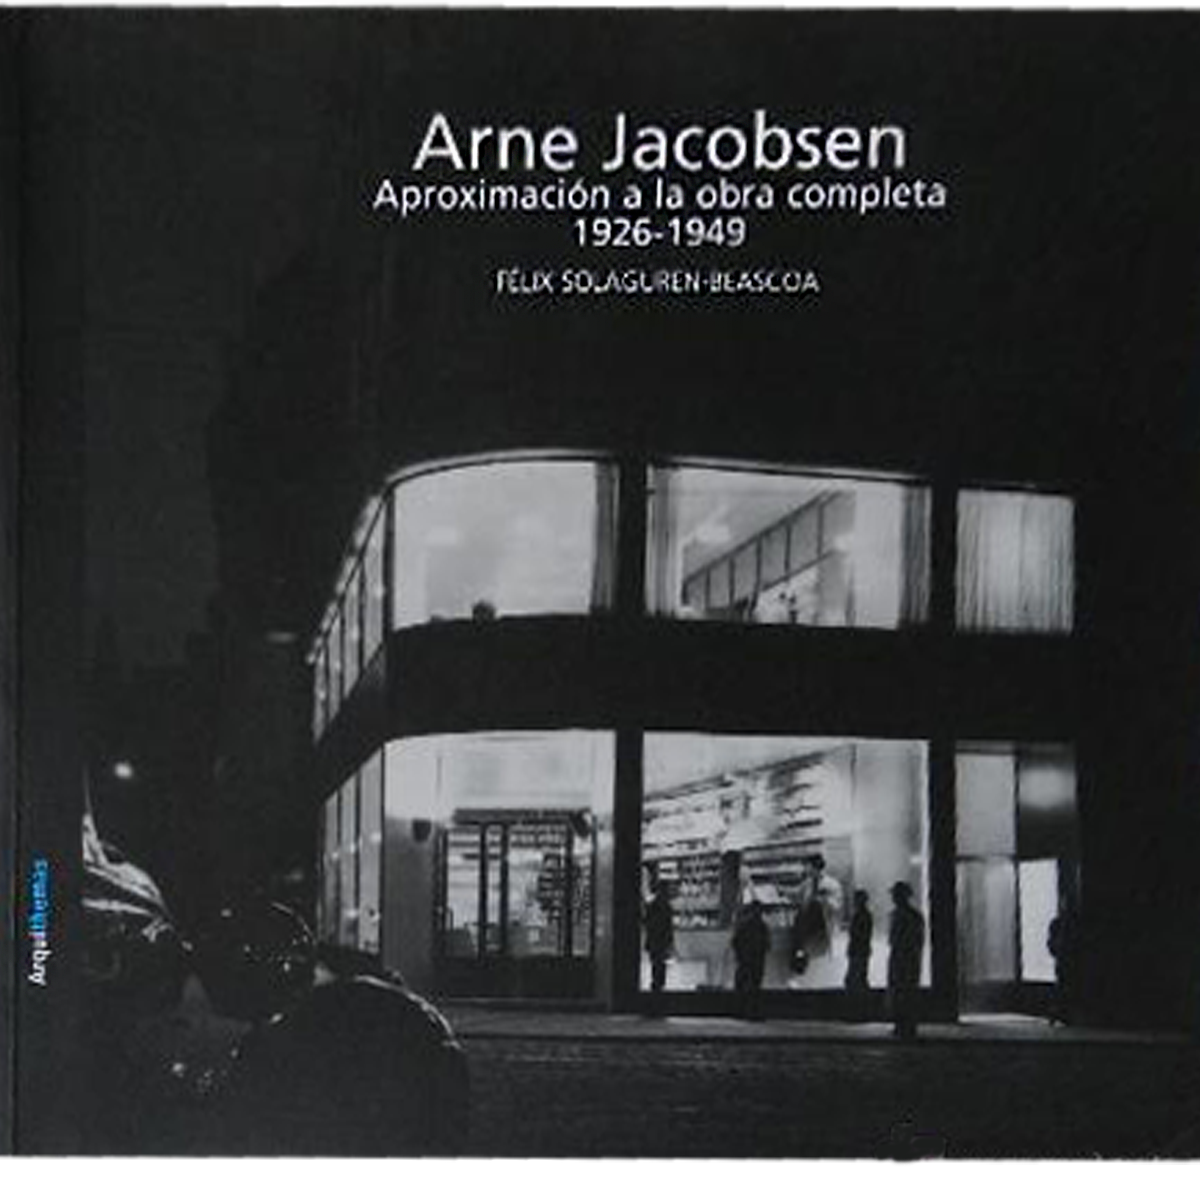 Arne Jacobsen: aproximación a la obra completa 1926-1949